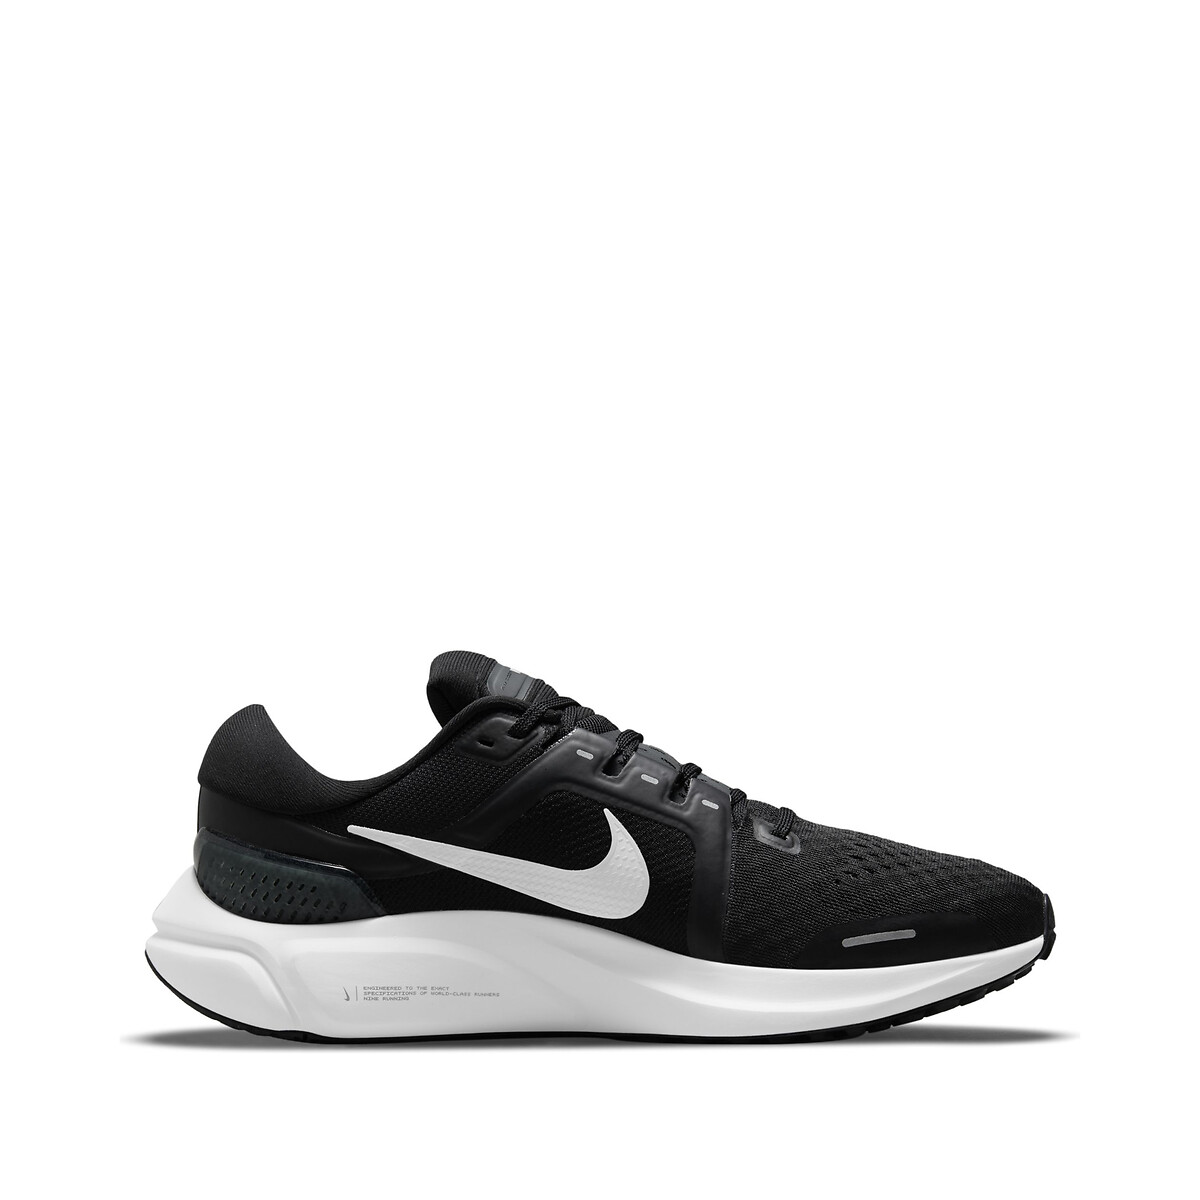 Zapatillas air zoom vomero negro/gris oscuro Nike La Redoute